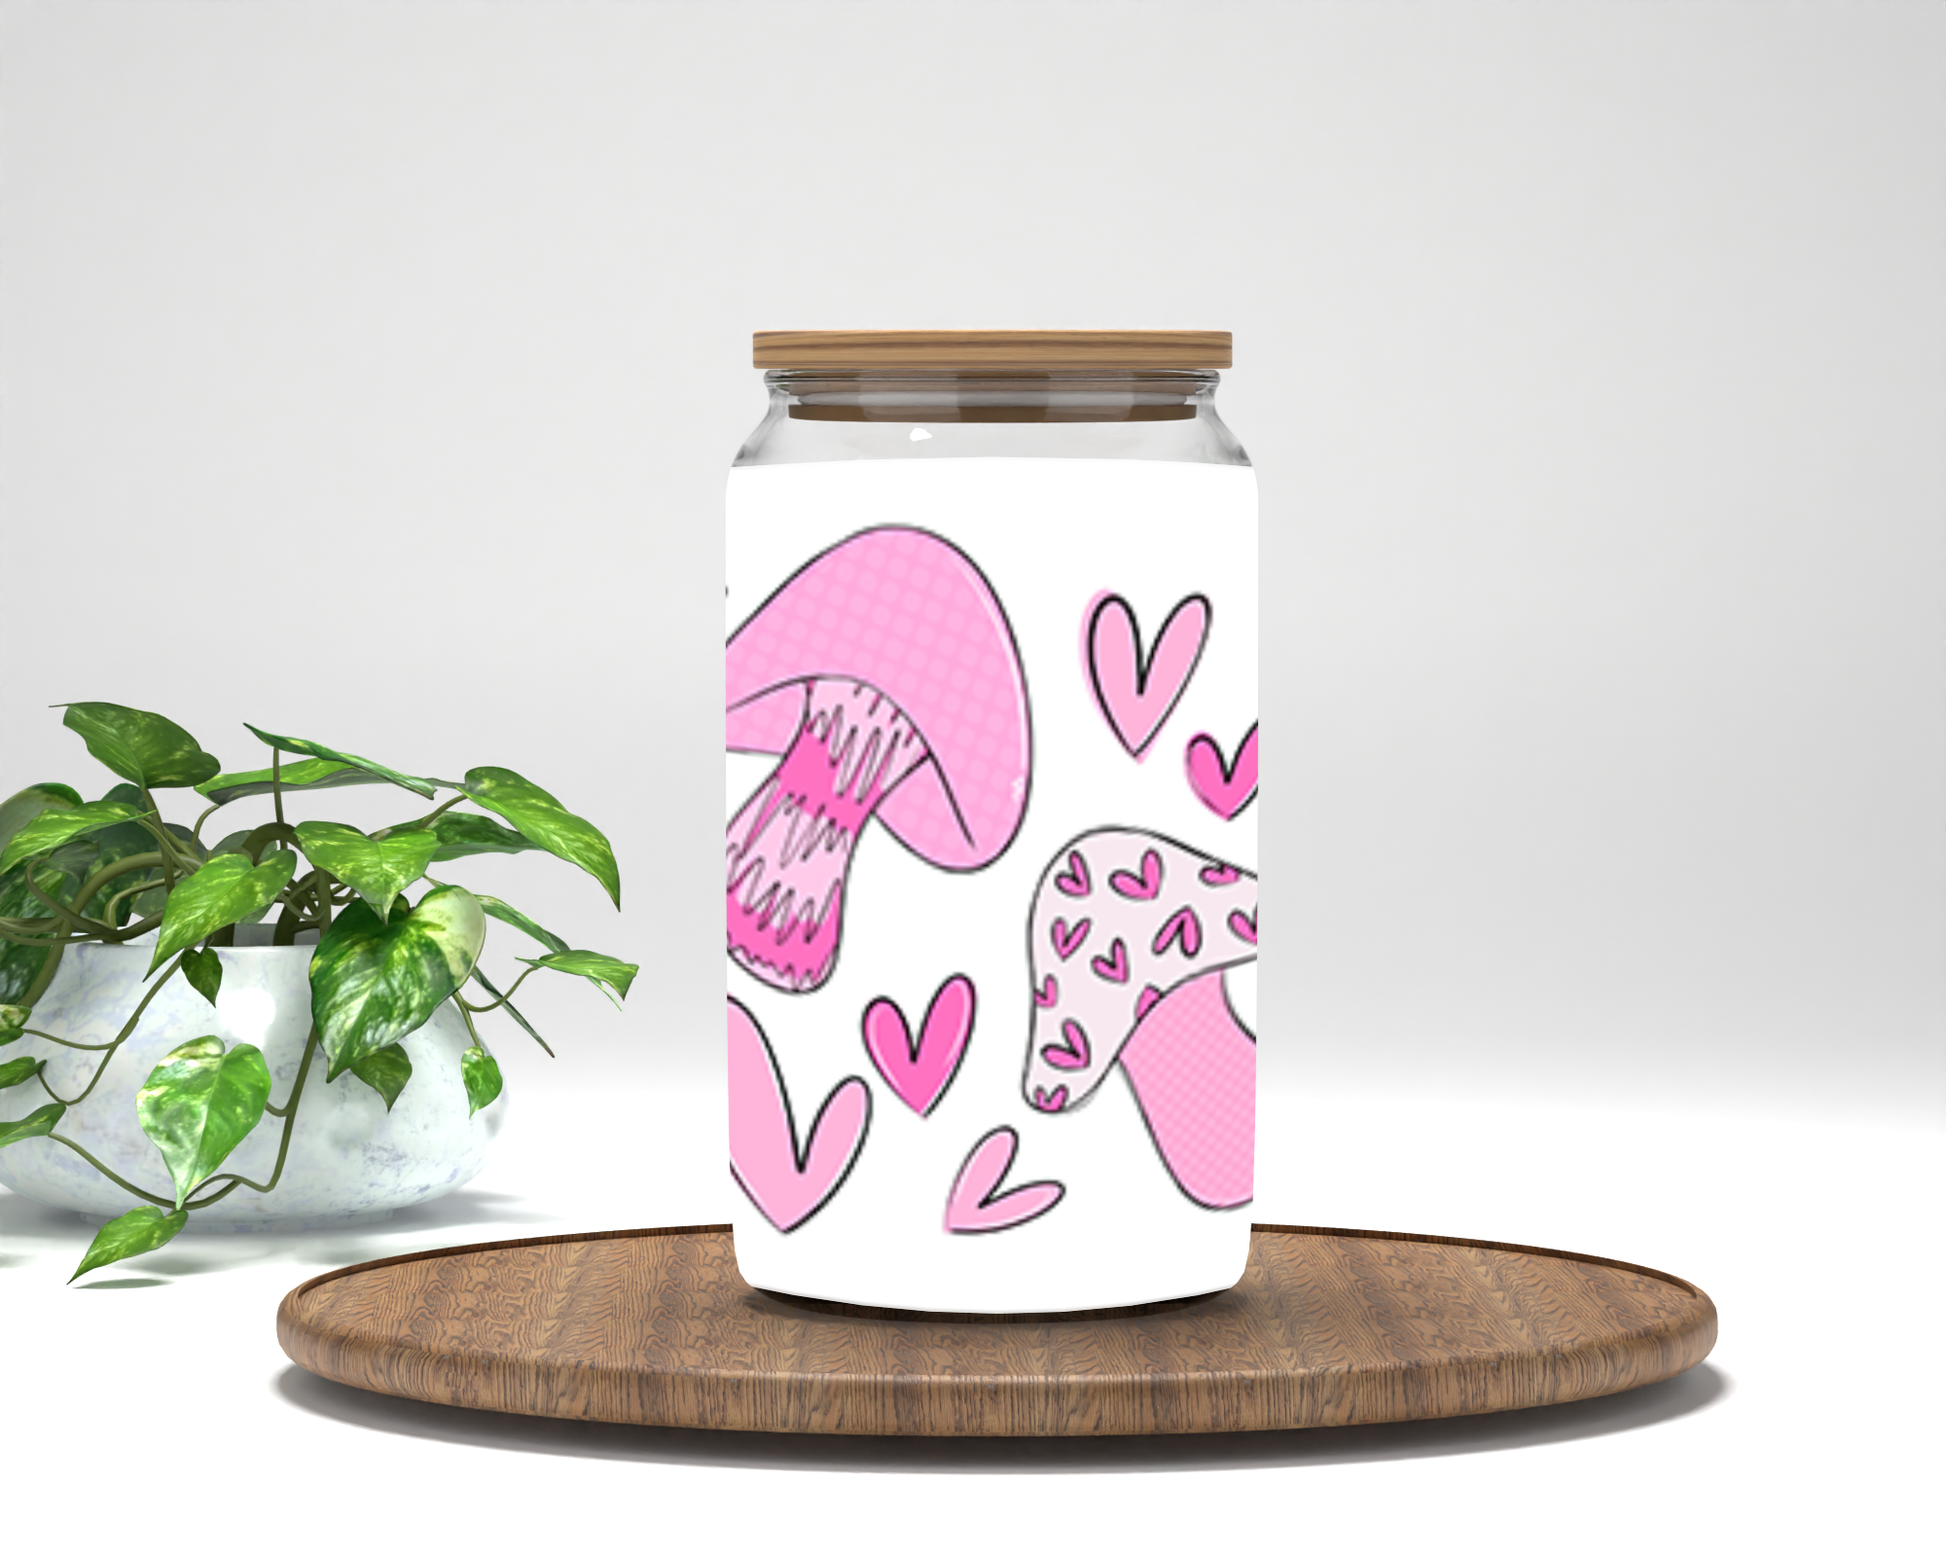 Valentine Mushroom 16oz Cup Wrap - UV DTF - DTF009 – Swiit Creations